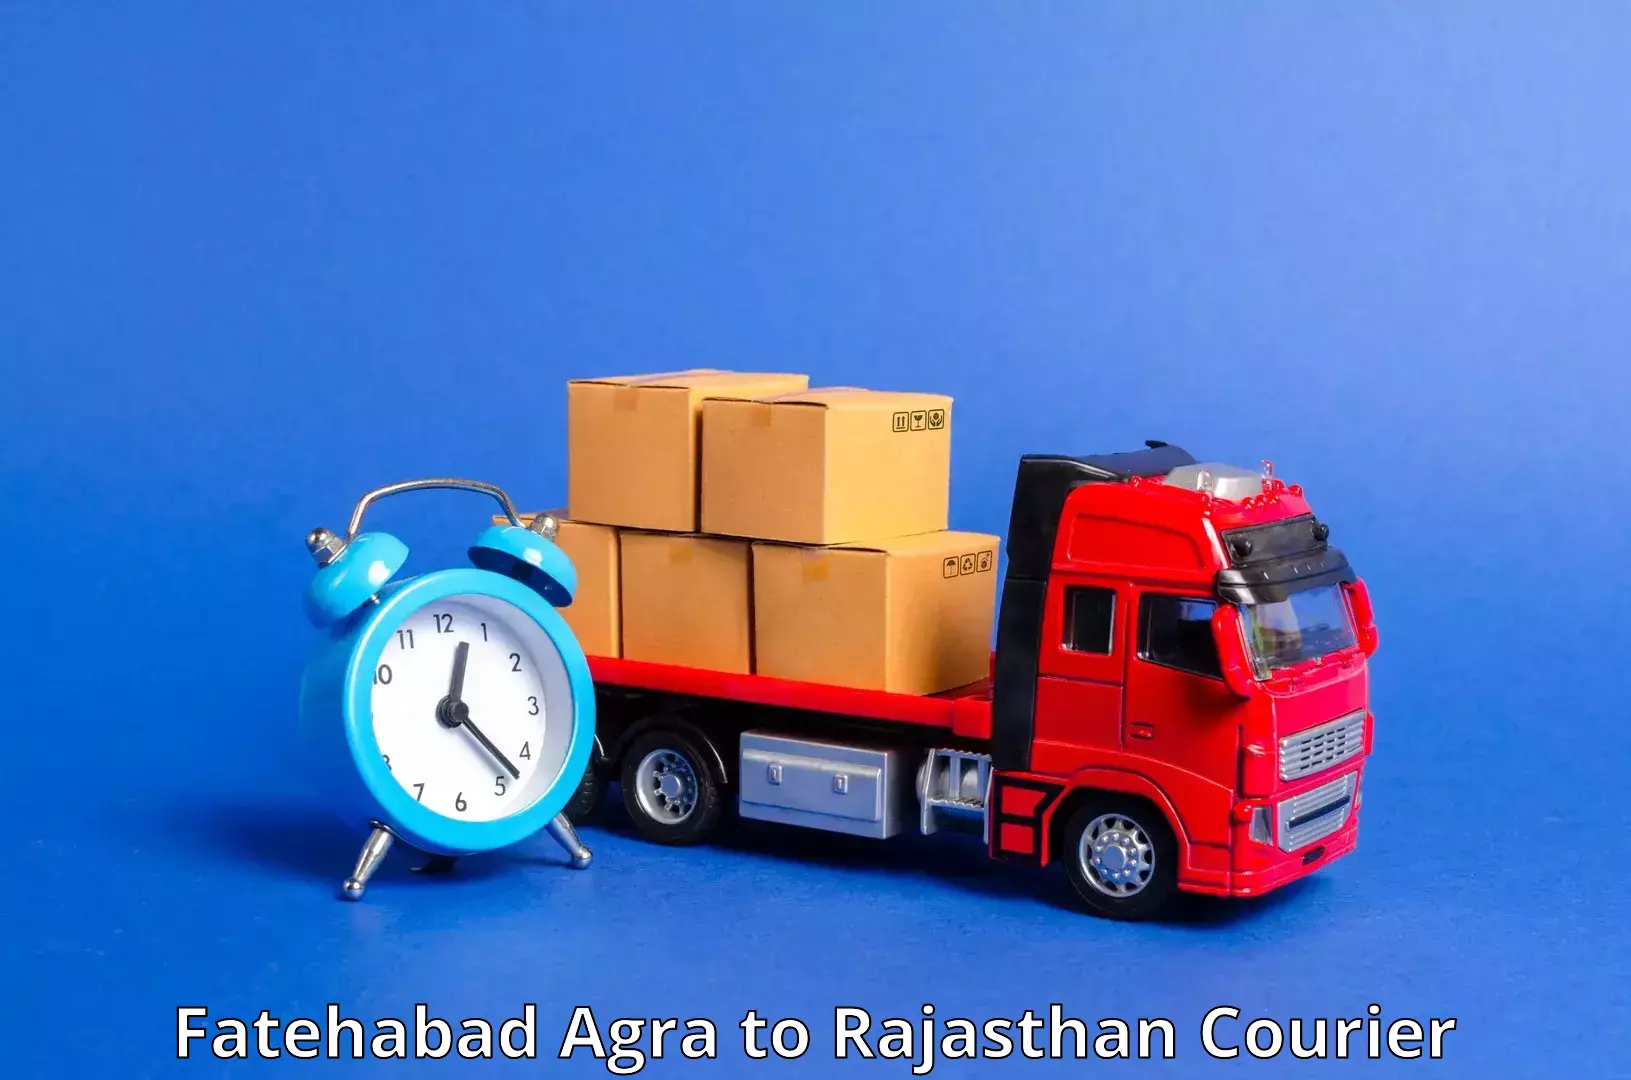 Global logistics network Fatehabad Agra to Hanumangarh